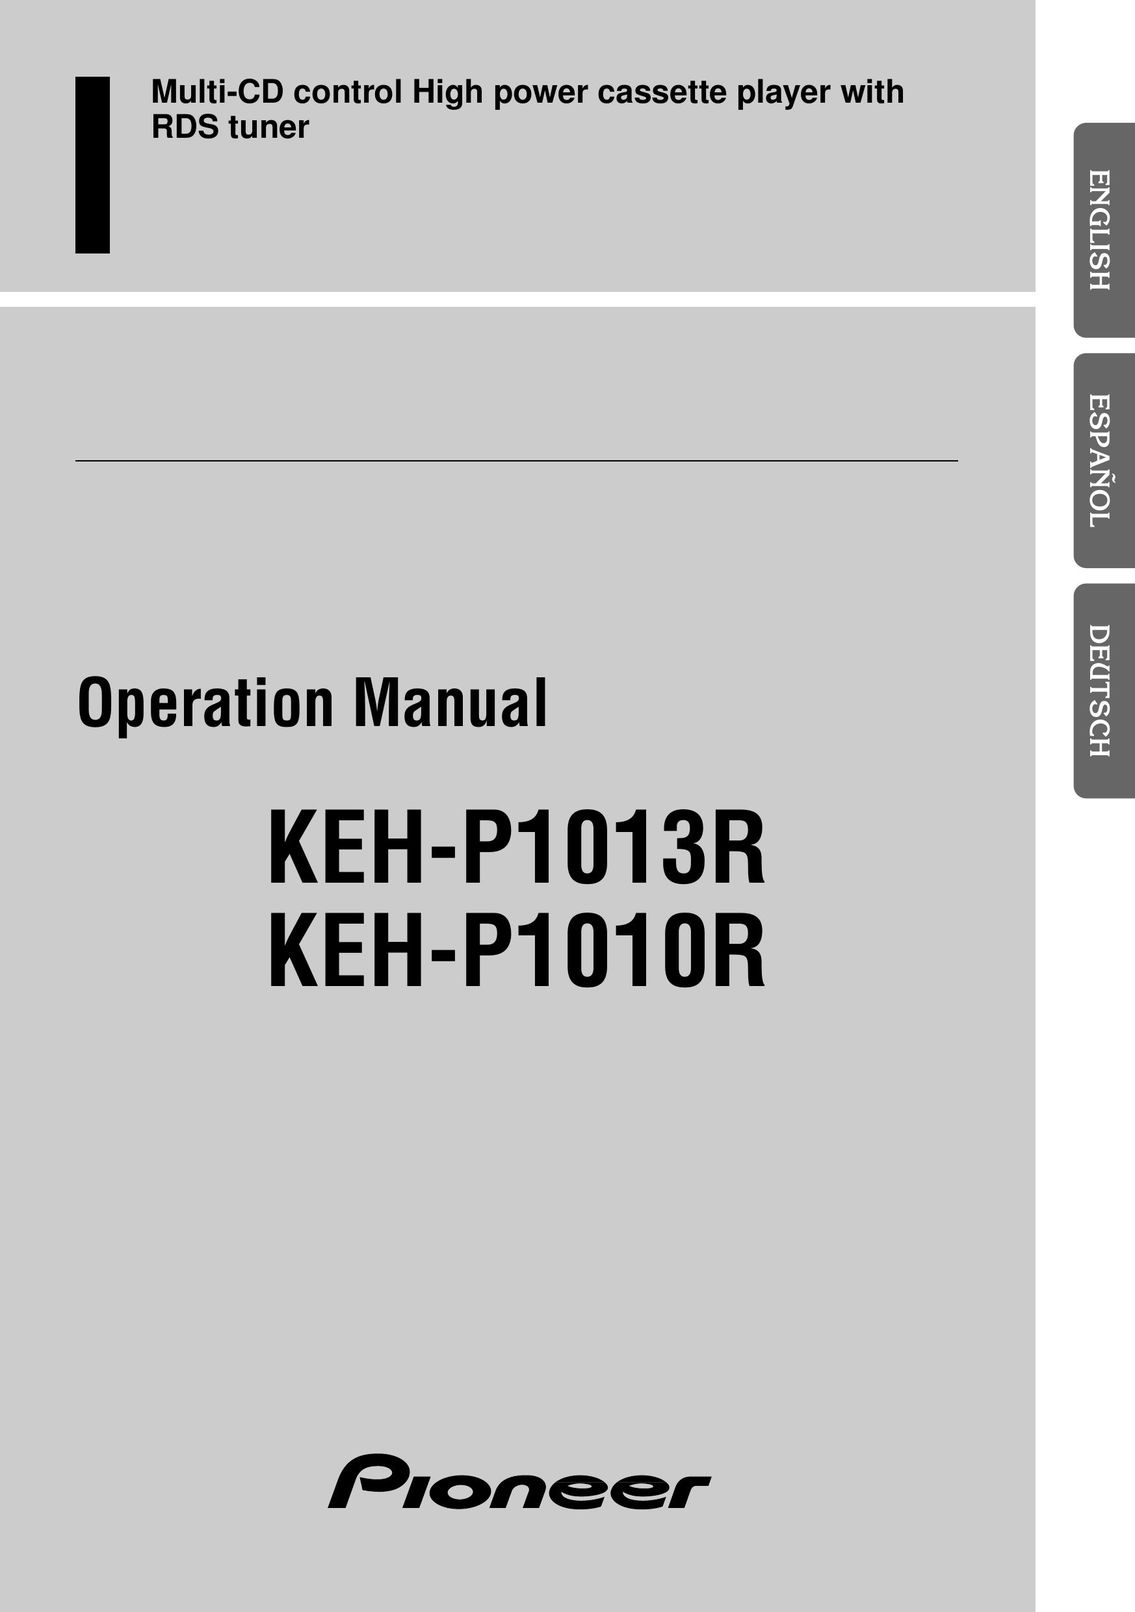 Pioneer KEH-P1013R Cassette Player User Manual